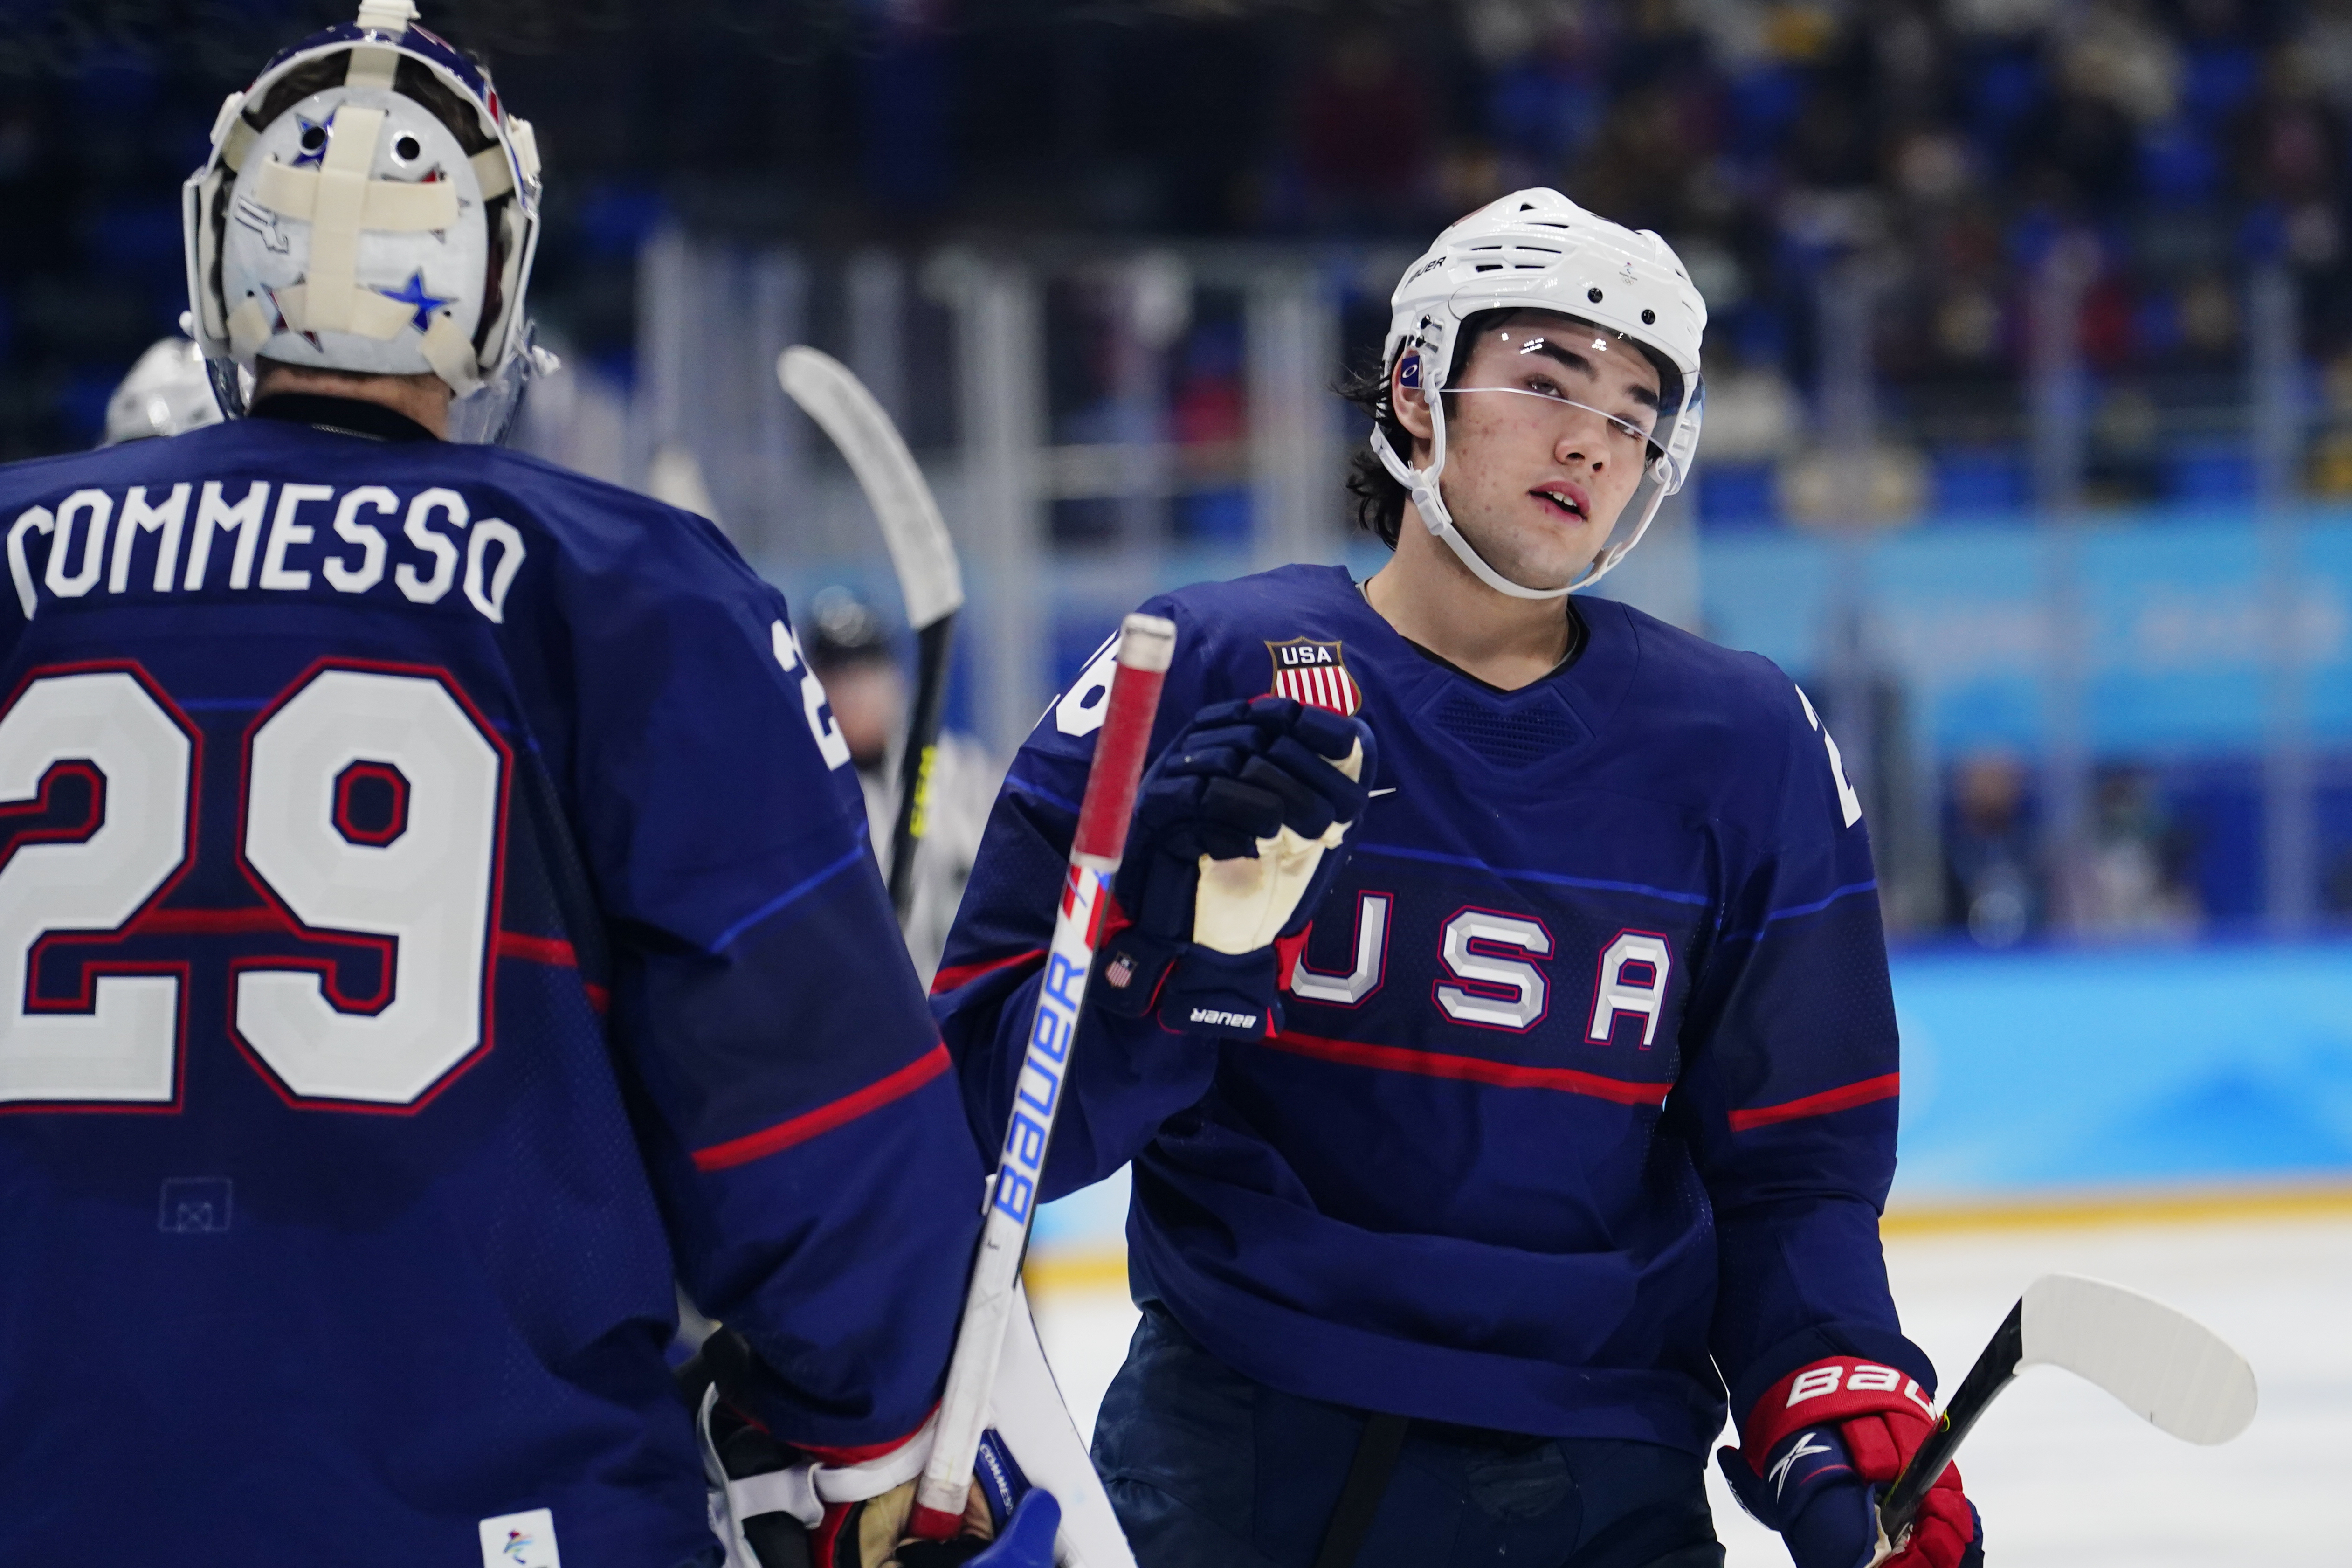 How to watch Olympic hockey USA vs